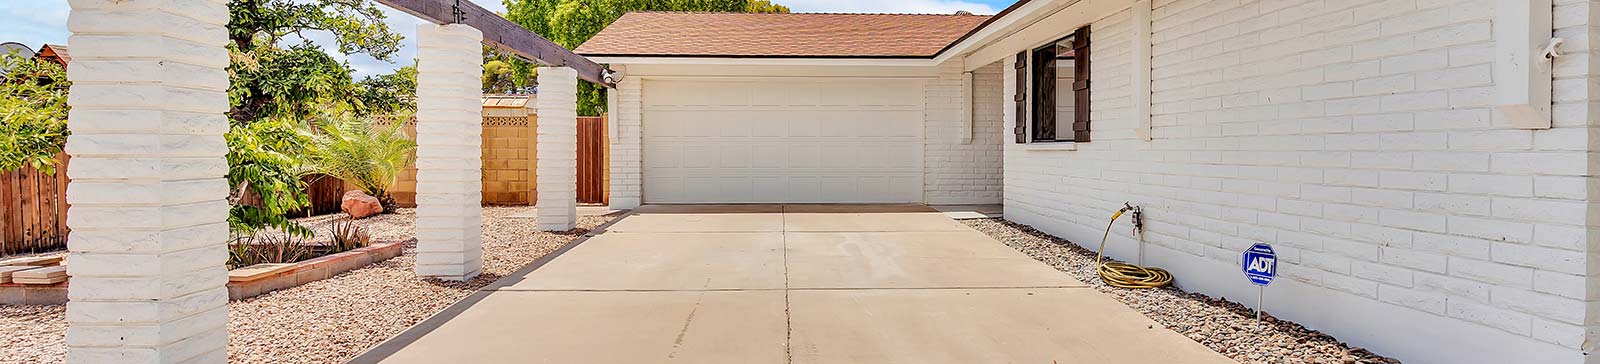 Garage Door Repair Company Near Me - Rancho Cordova CA